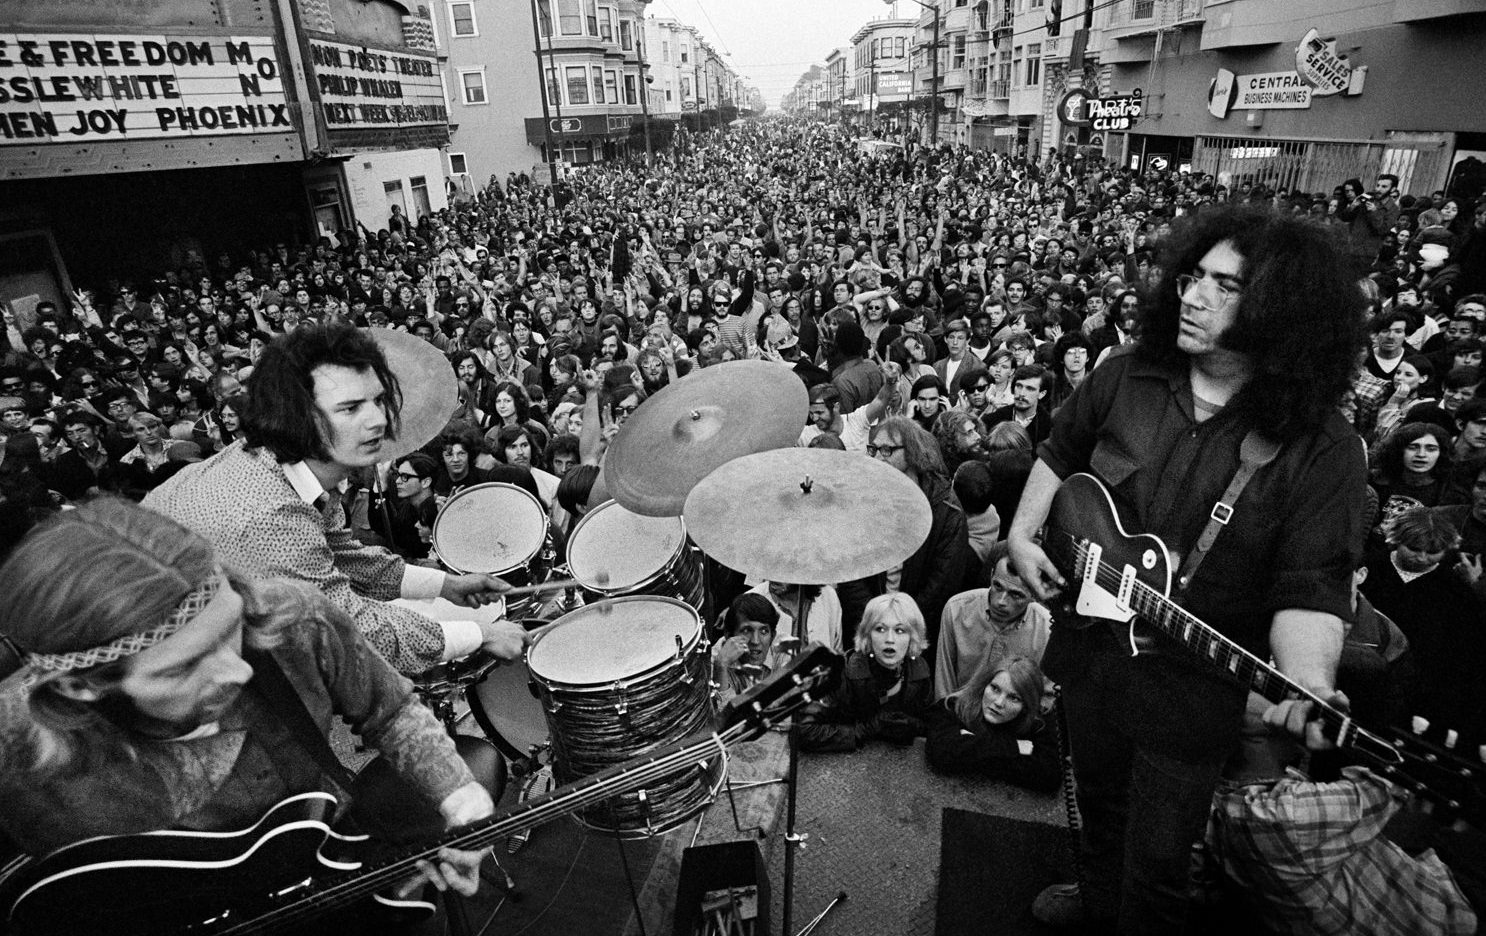 The Grateful Dead's last free concert on Haight Street, 1968.